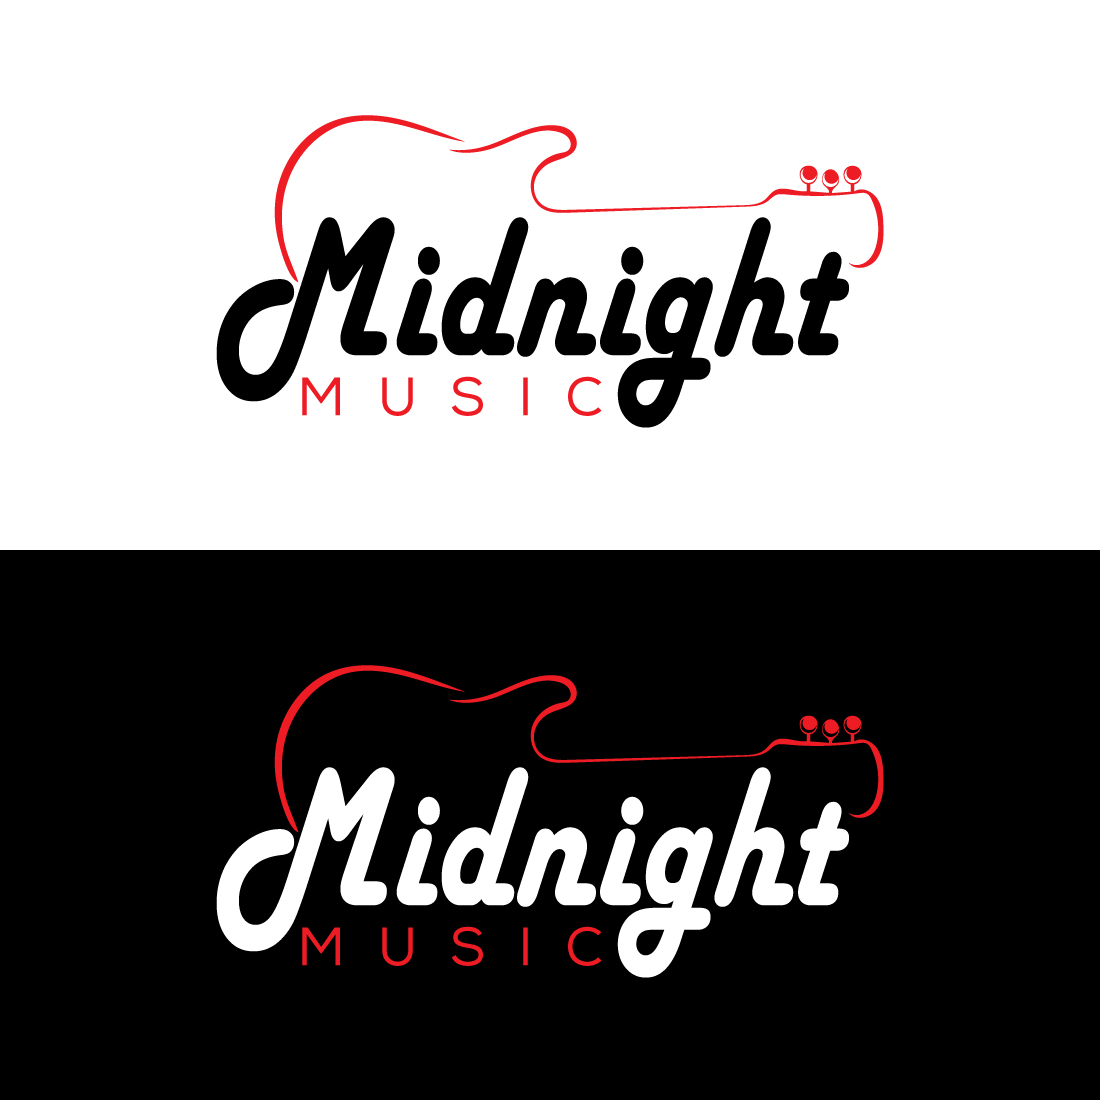 Music Logo cover image.